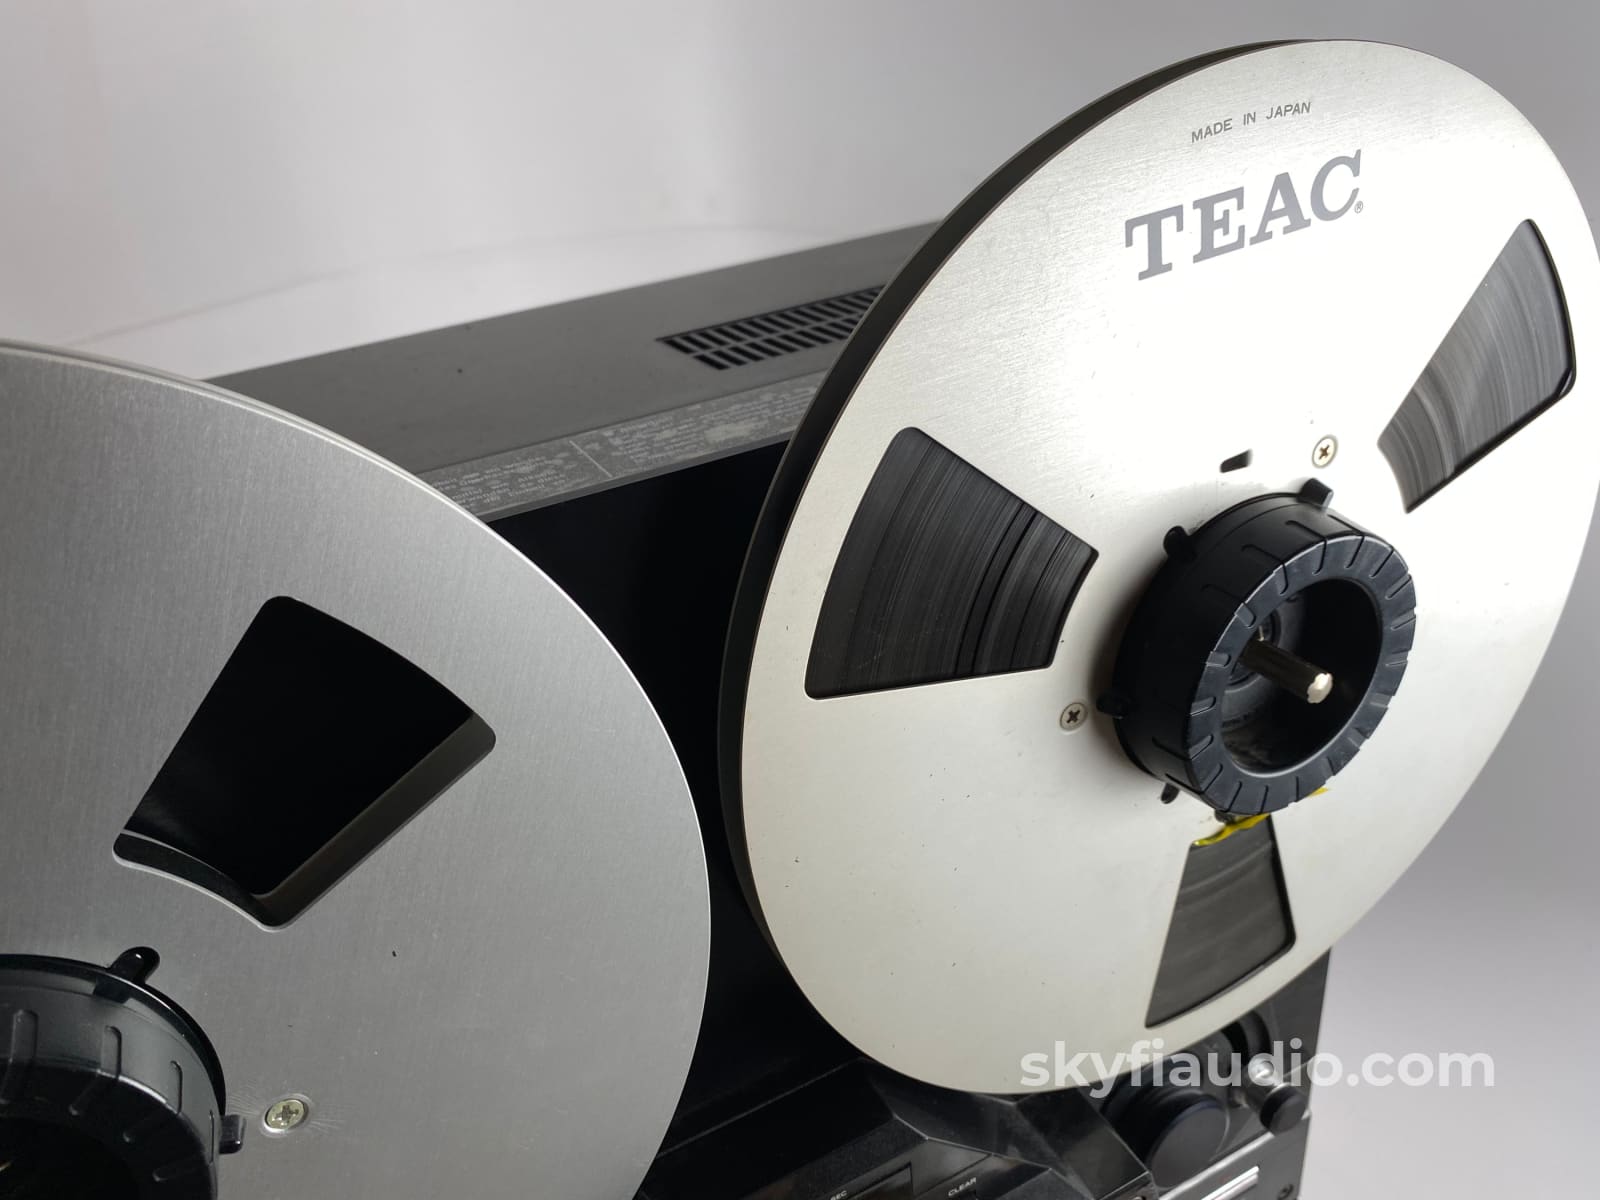 Pumping some heavy beats on dad's TEAC X-2000R Reel to Reel Tape Deck 🔥😁  @teac_global #teac #teacx2000r #reeltoreeltape #reelt